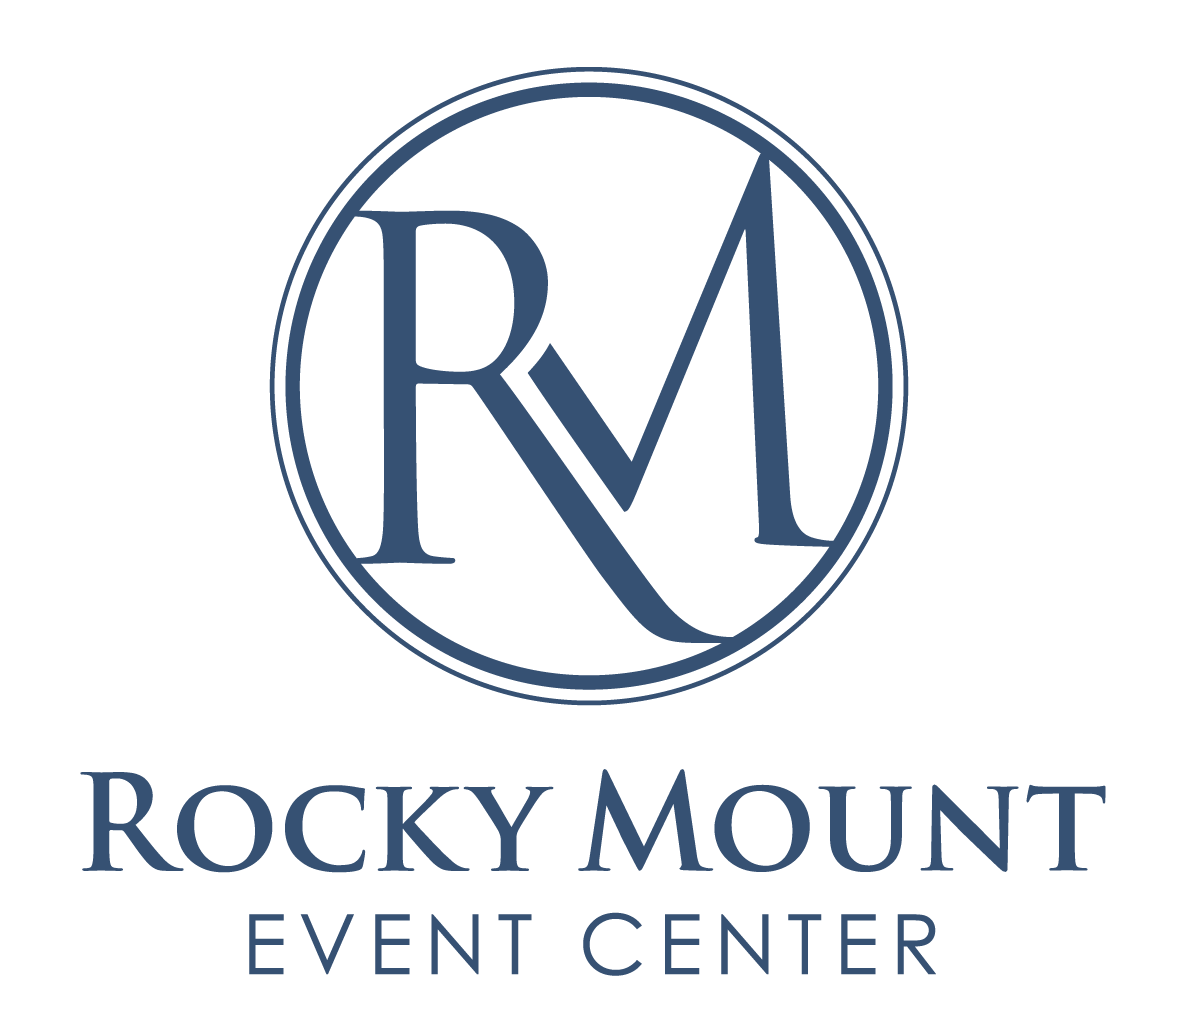 Rocky Mount Event Center